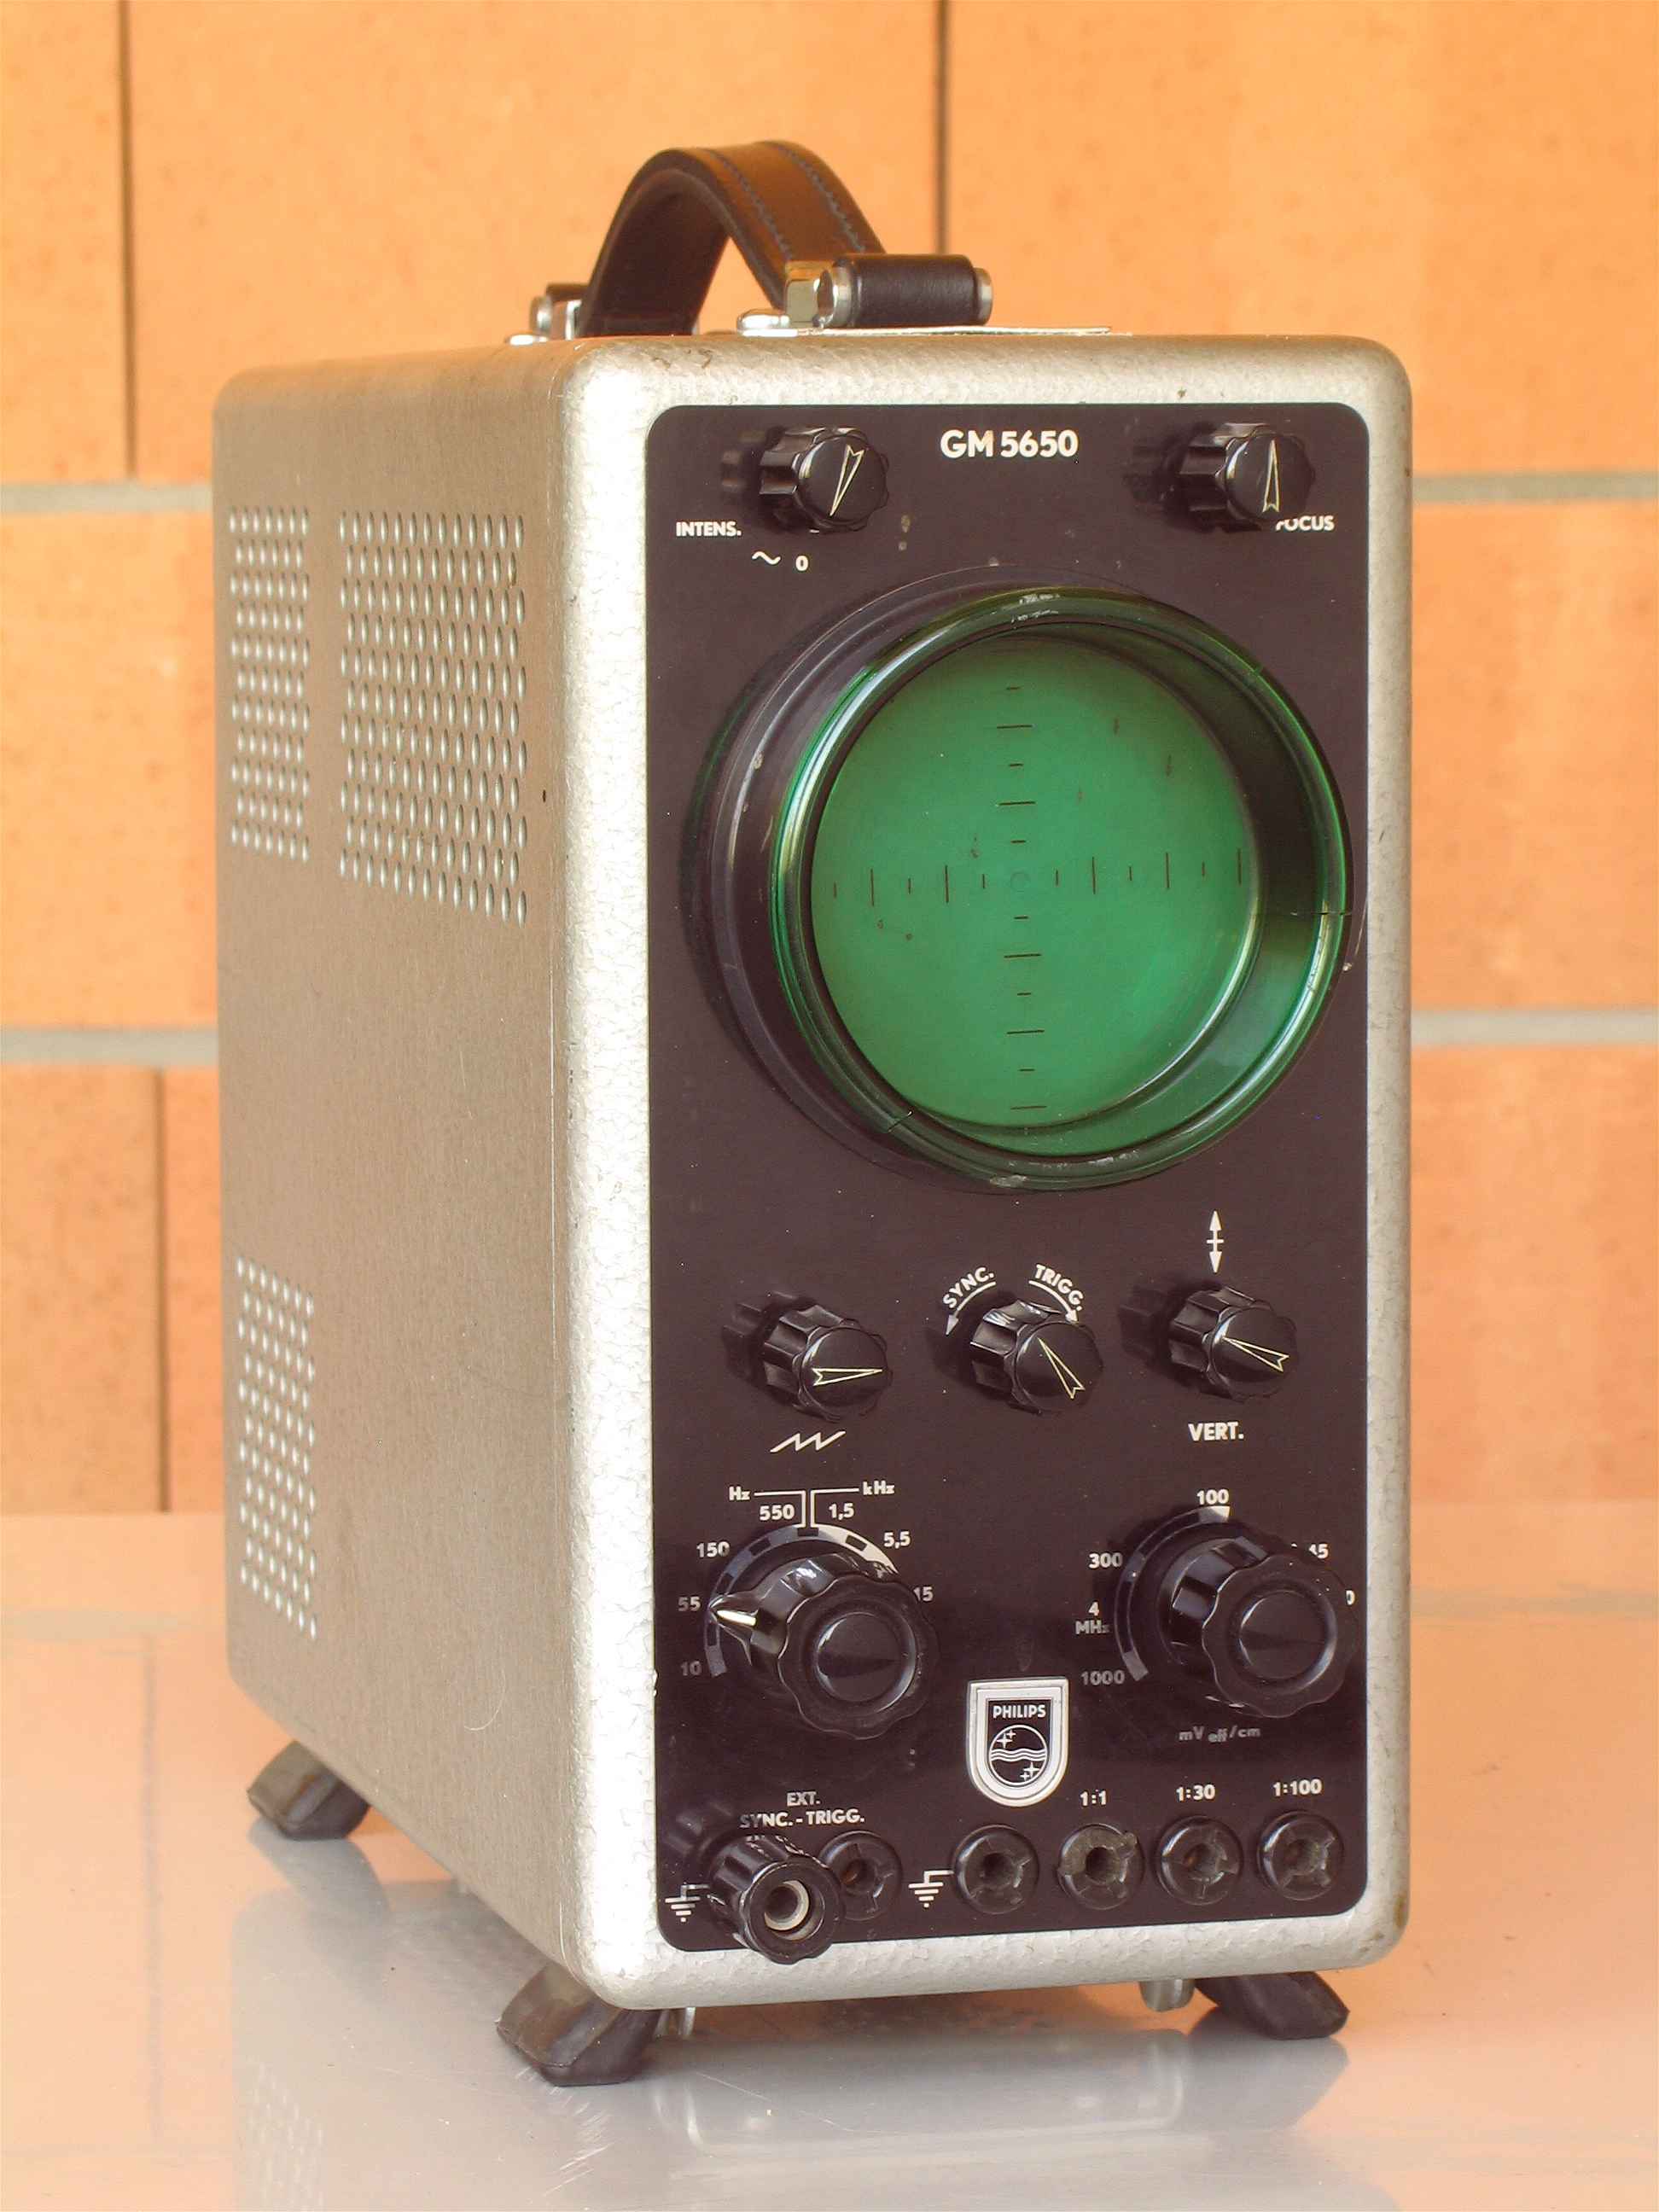 Oscilloscope à tube cathodique
(Philips GM 5650)